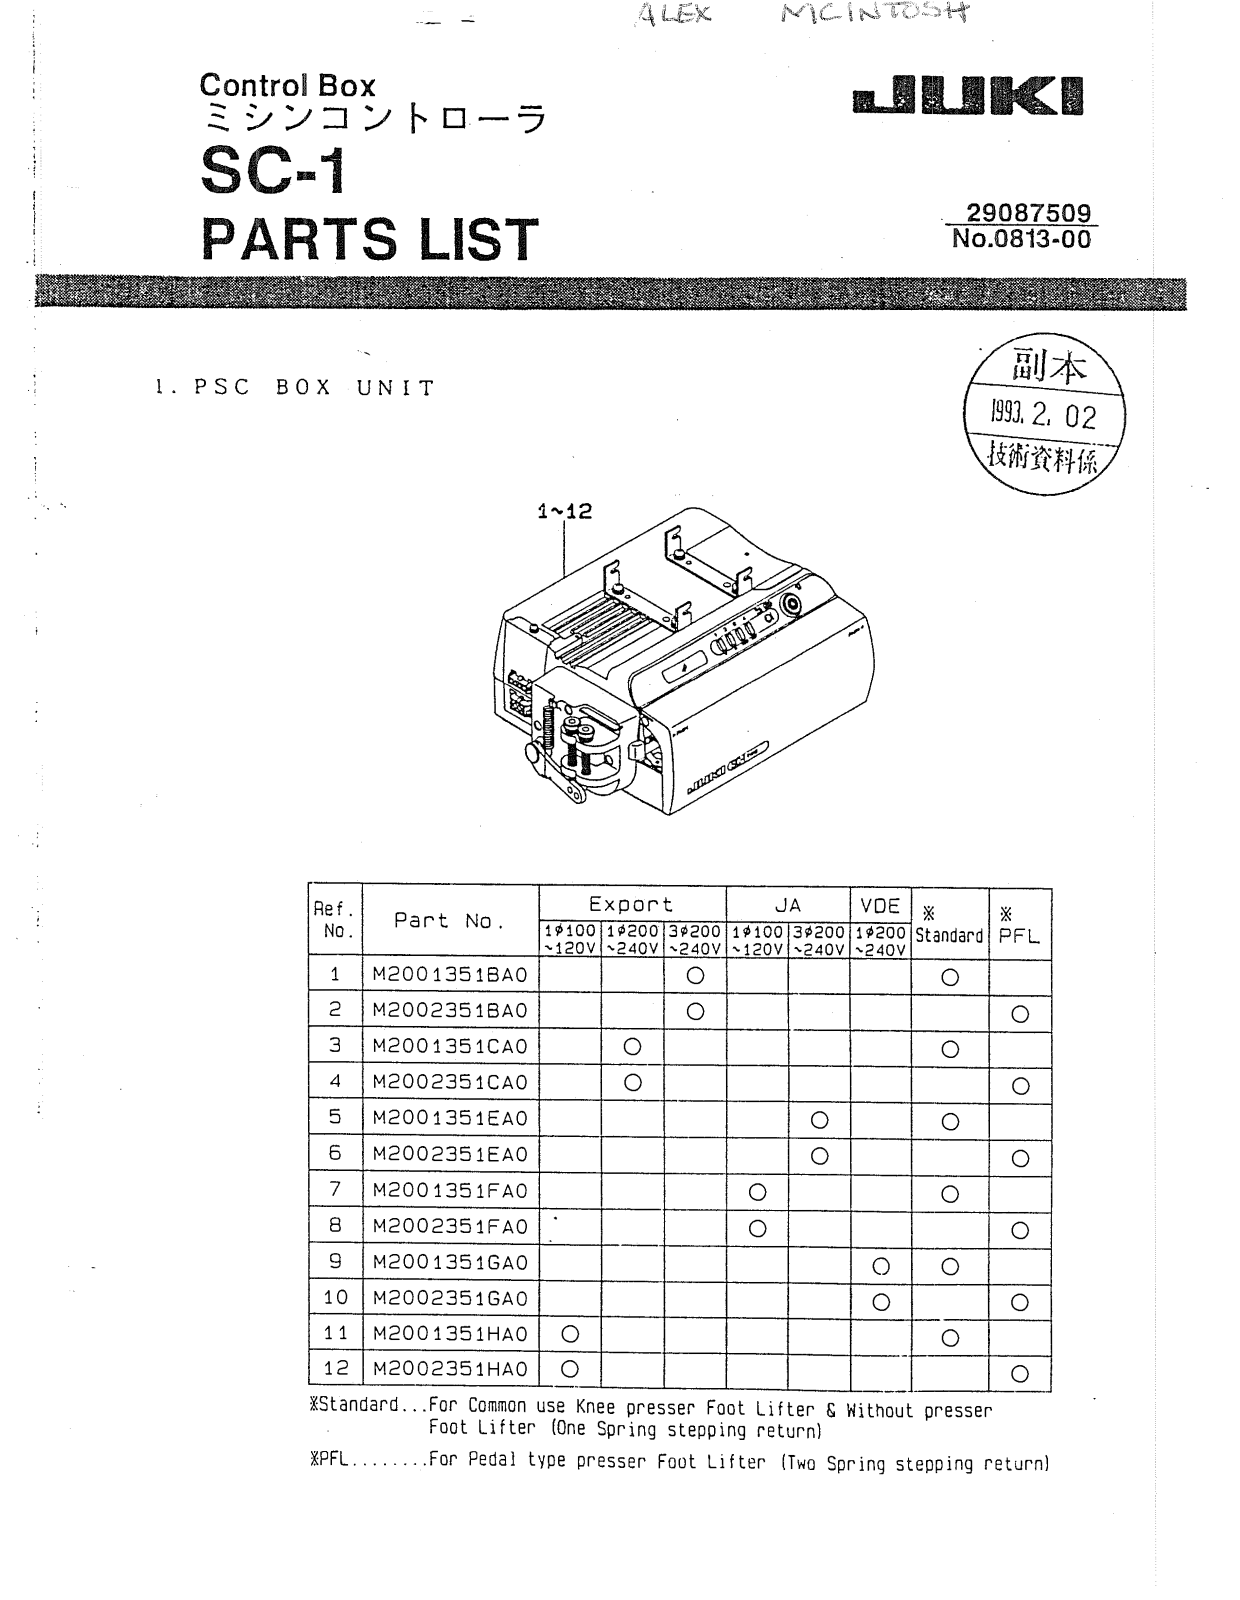 Juki SC-1 Parts List